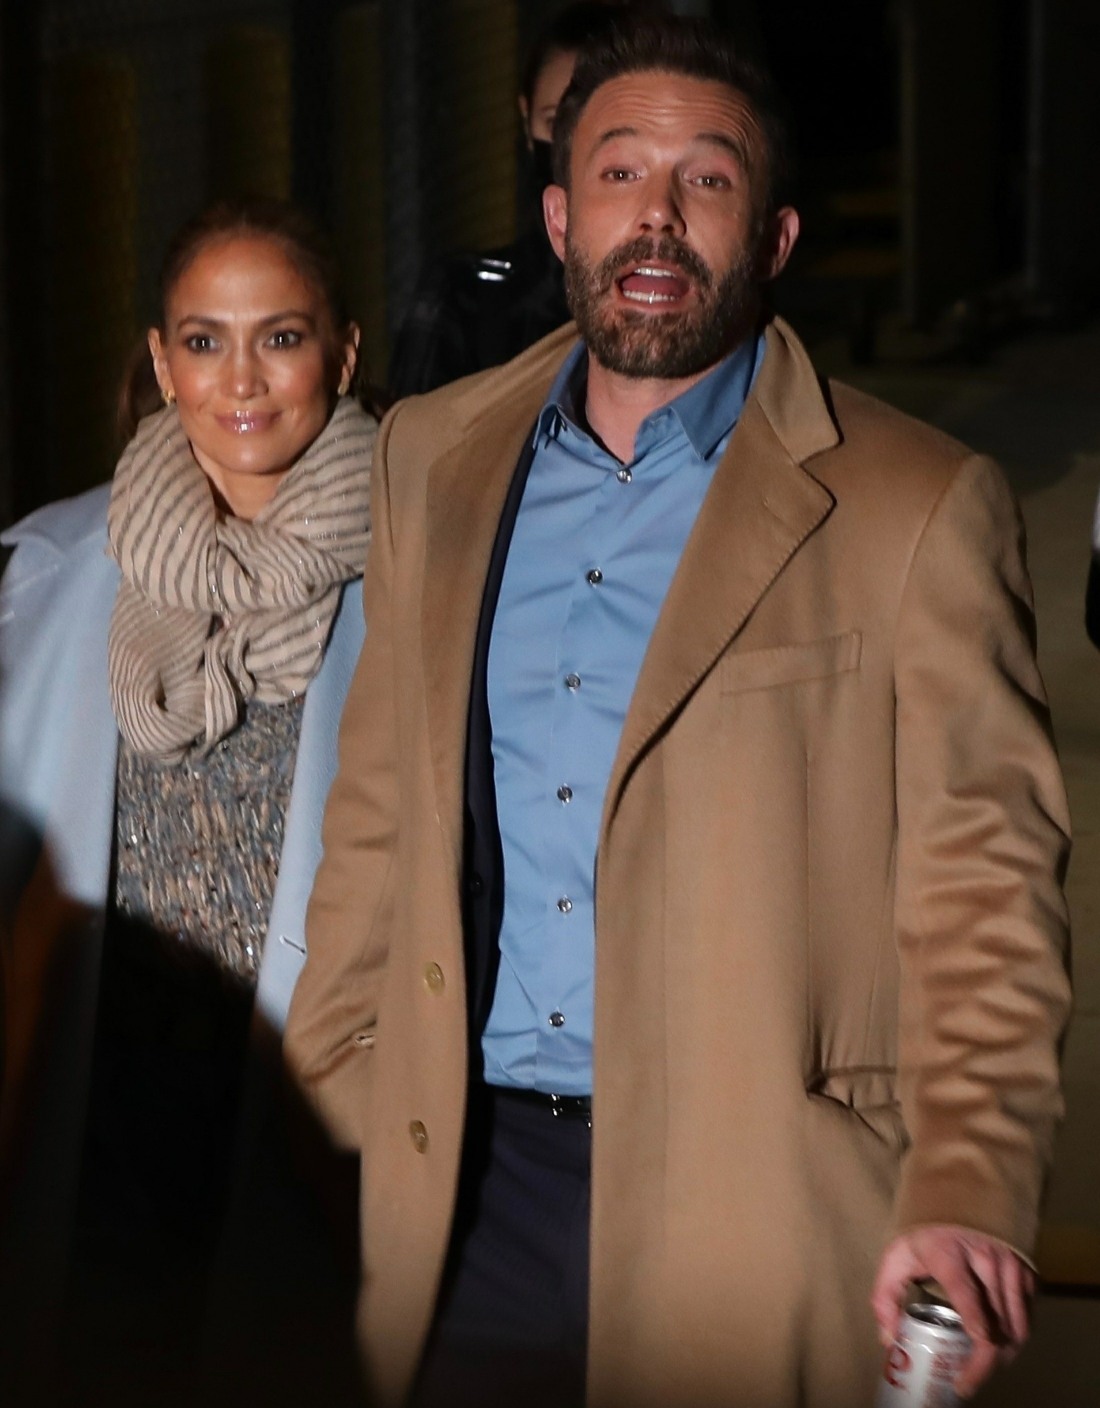 Ben Affleck and Jennifer Lopez couple up for an appearance on Jimmy Kimmel Live!